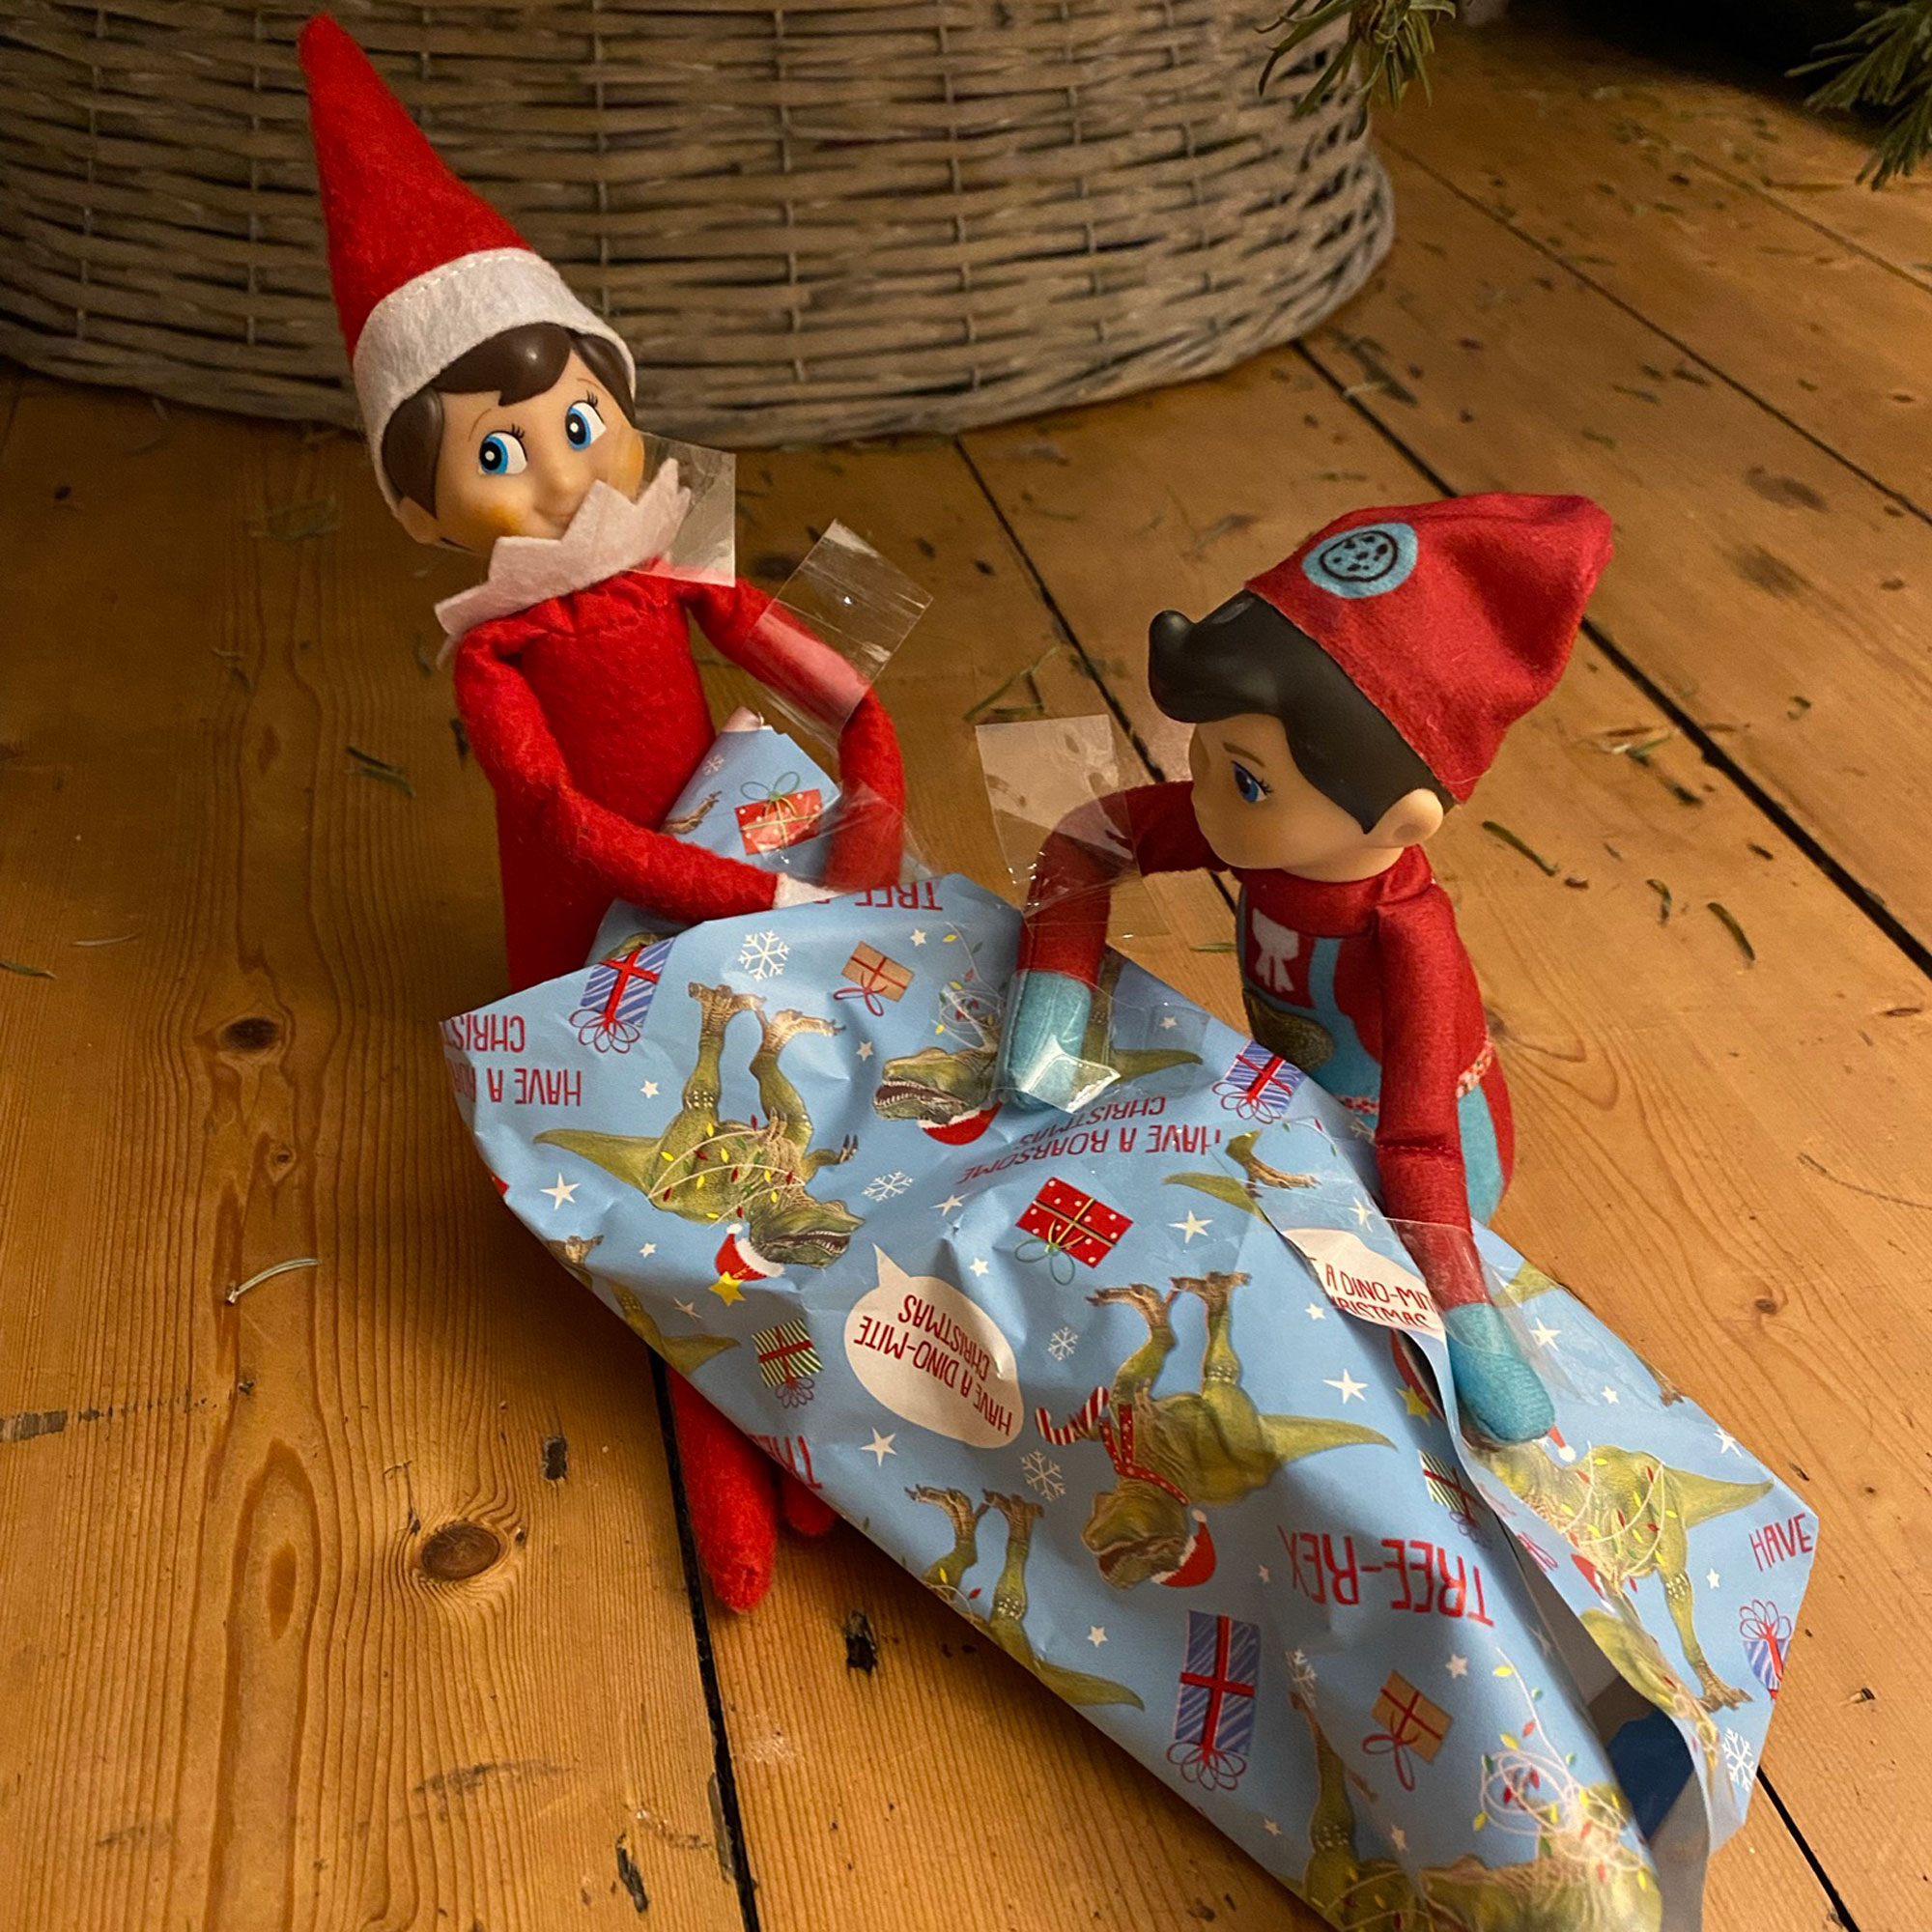 15 Elf on the Shelf ideas to inspire mischievous Elf Scouts